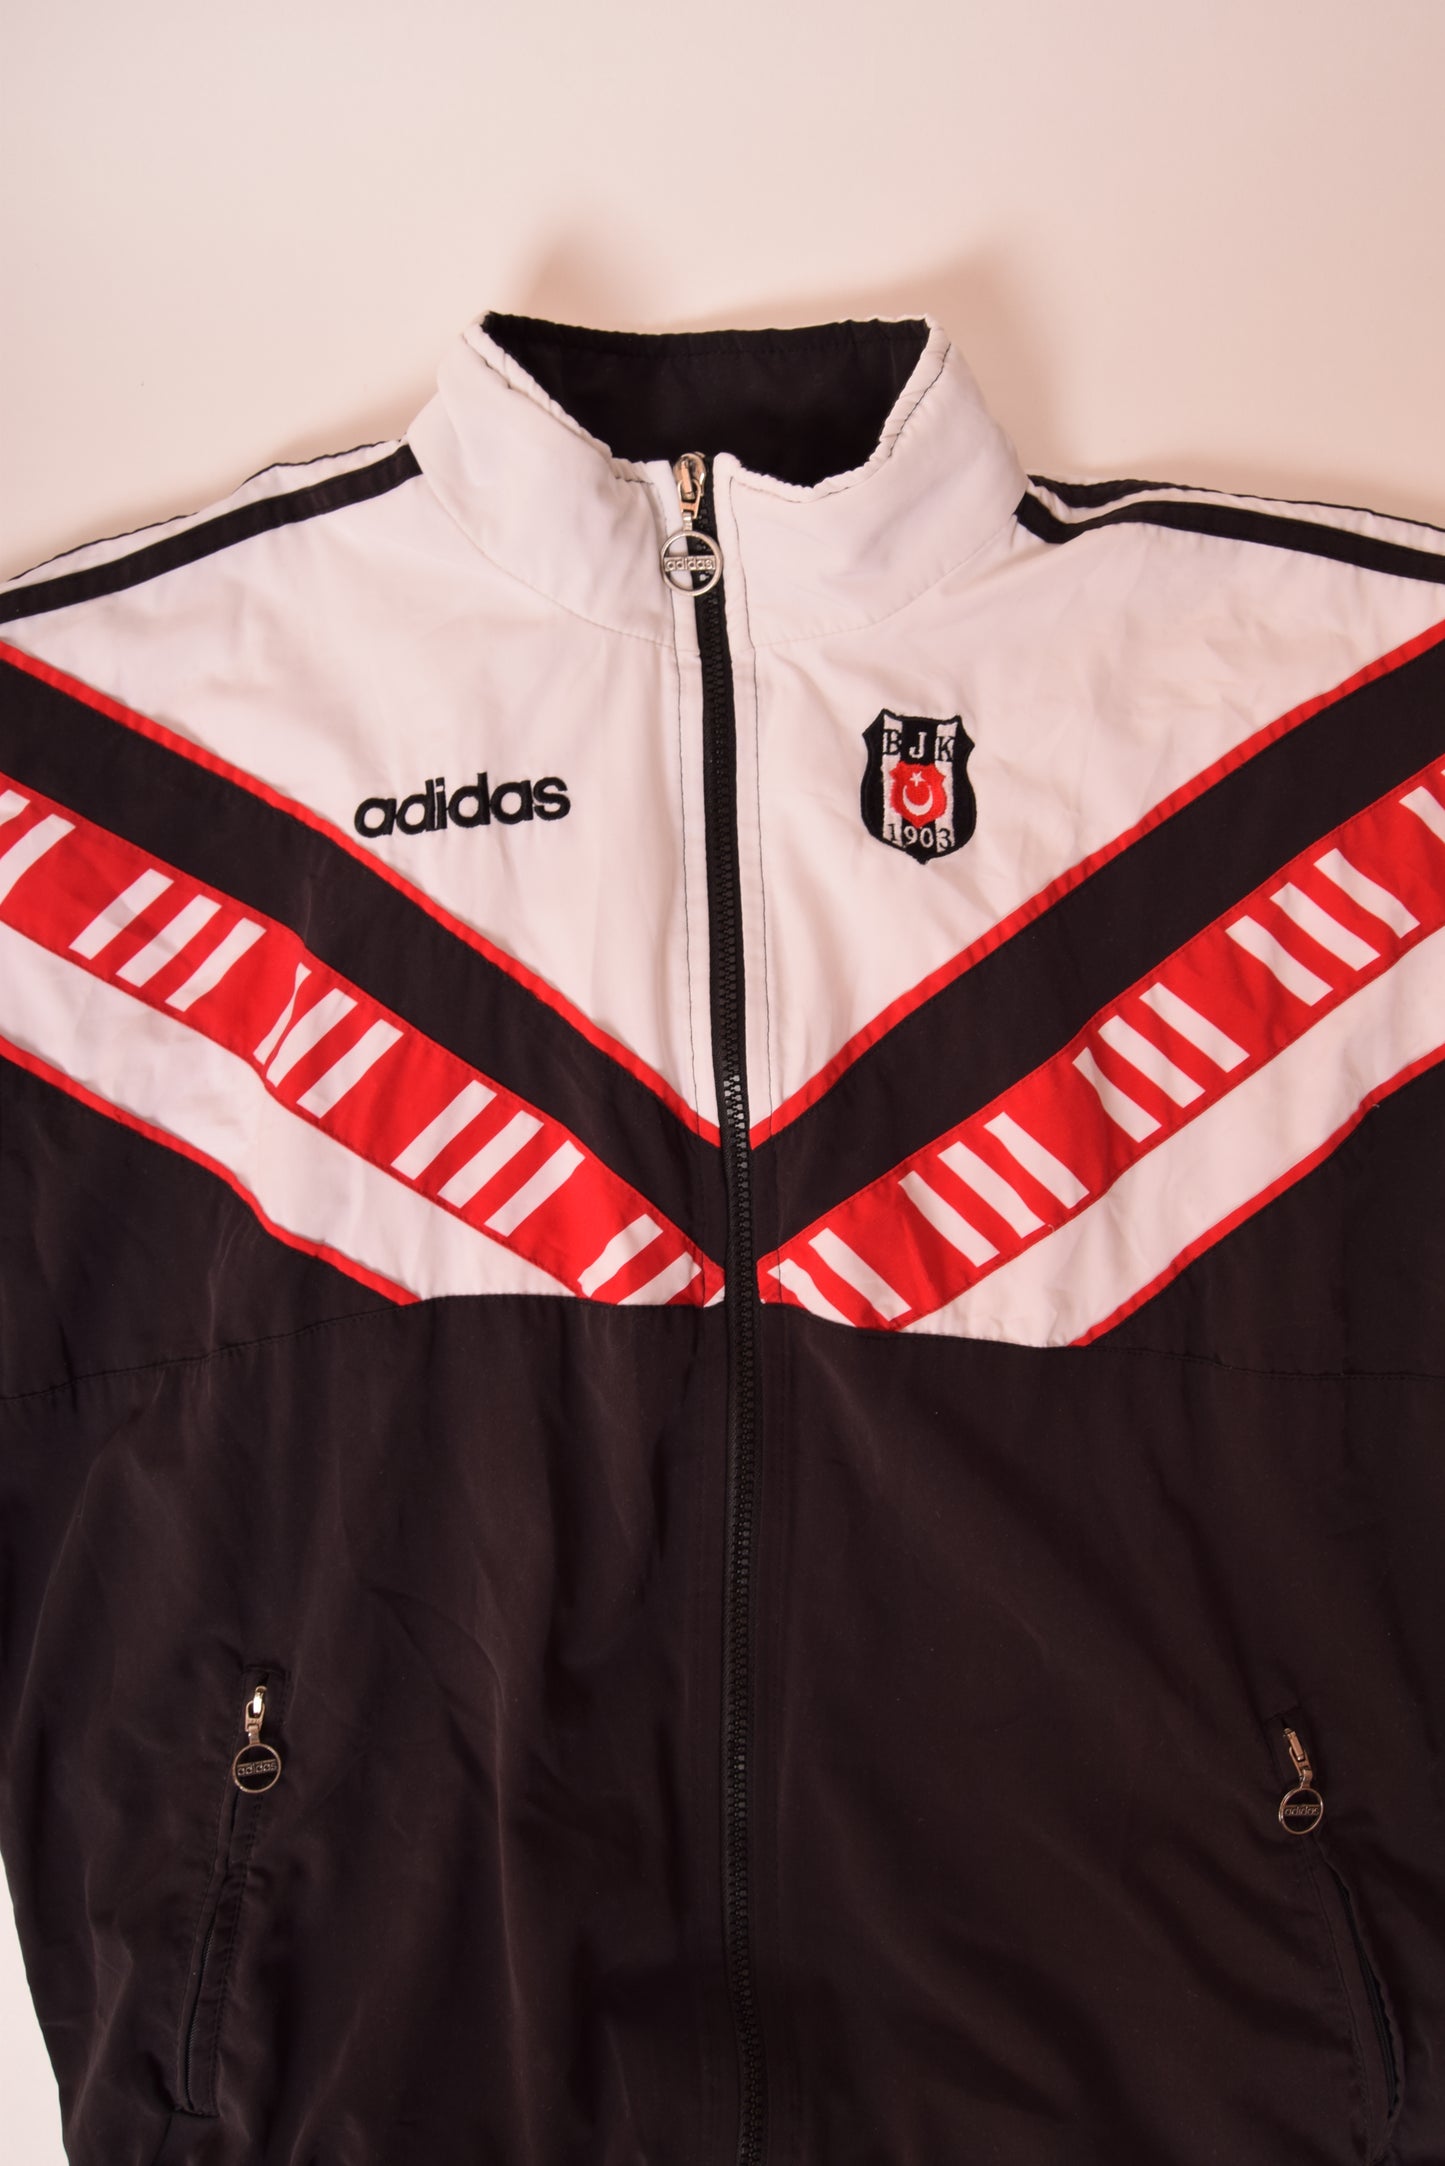 Vintage Besiktas Adidas Track Top Jacket 1997-1998 Black Red White Size L